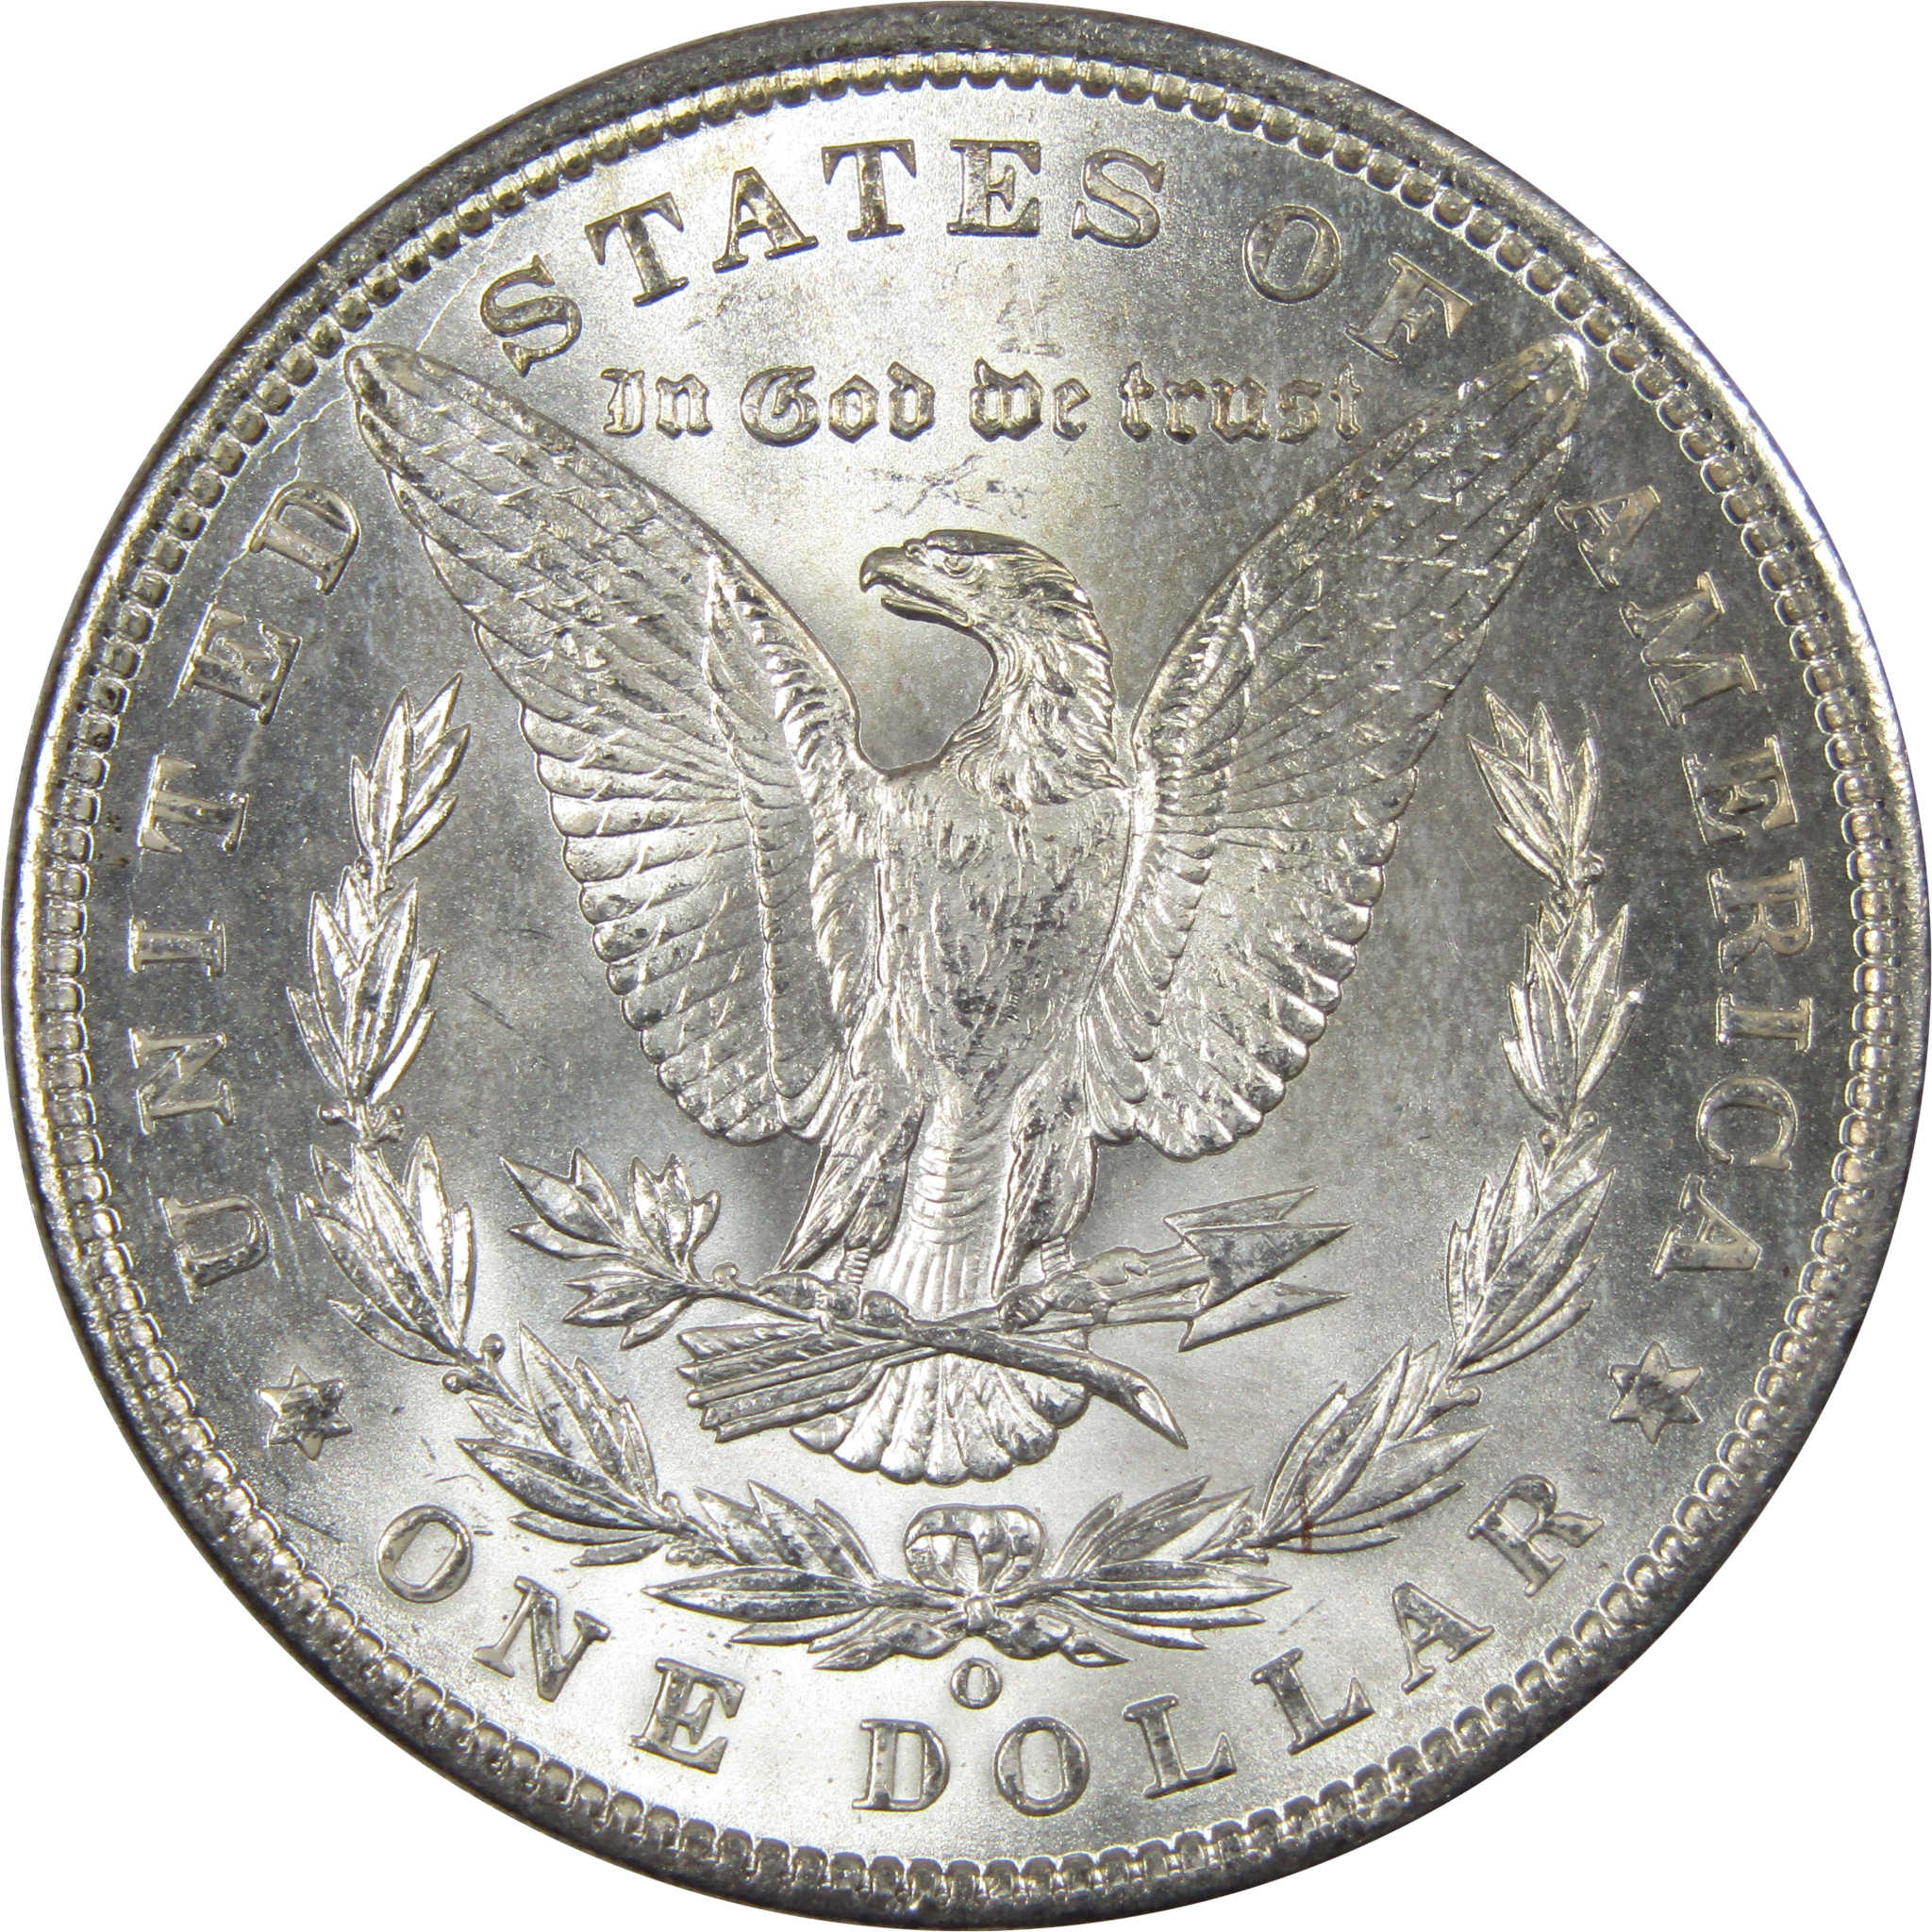 1900 O Morgan Dollar BU Uncirculated Mint State 90% Silver SKU:IPC9785 - Morgan coin - Morgan silver dollar - Morgan silver dollar for sale - Profile Coins &amp; Collectibles